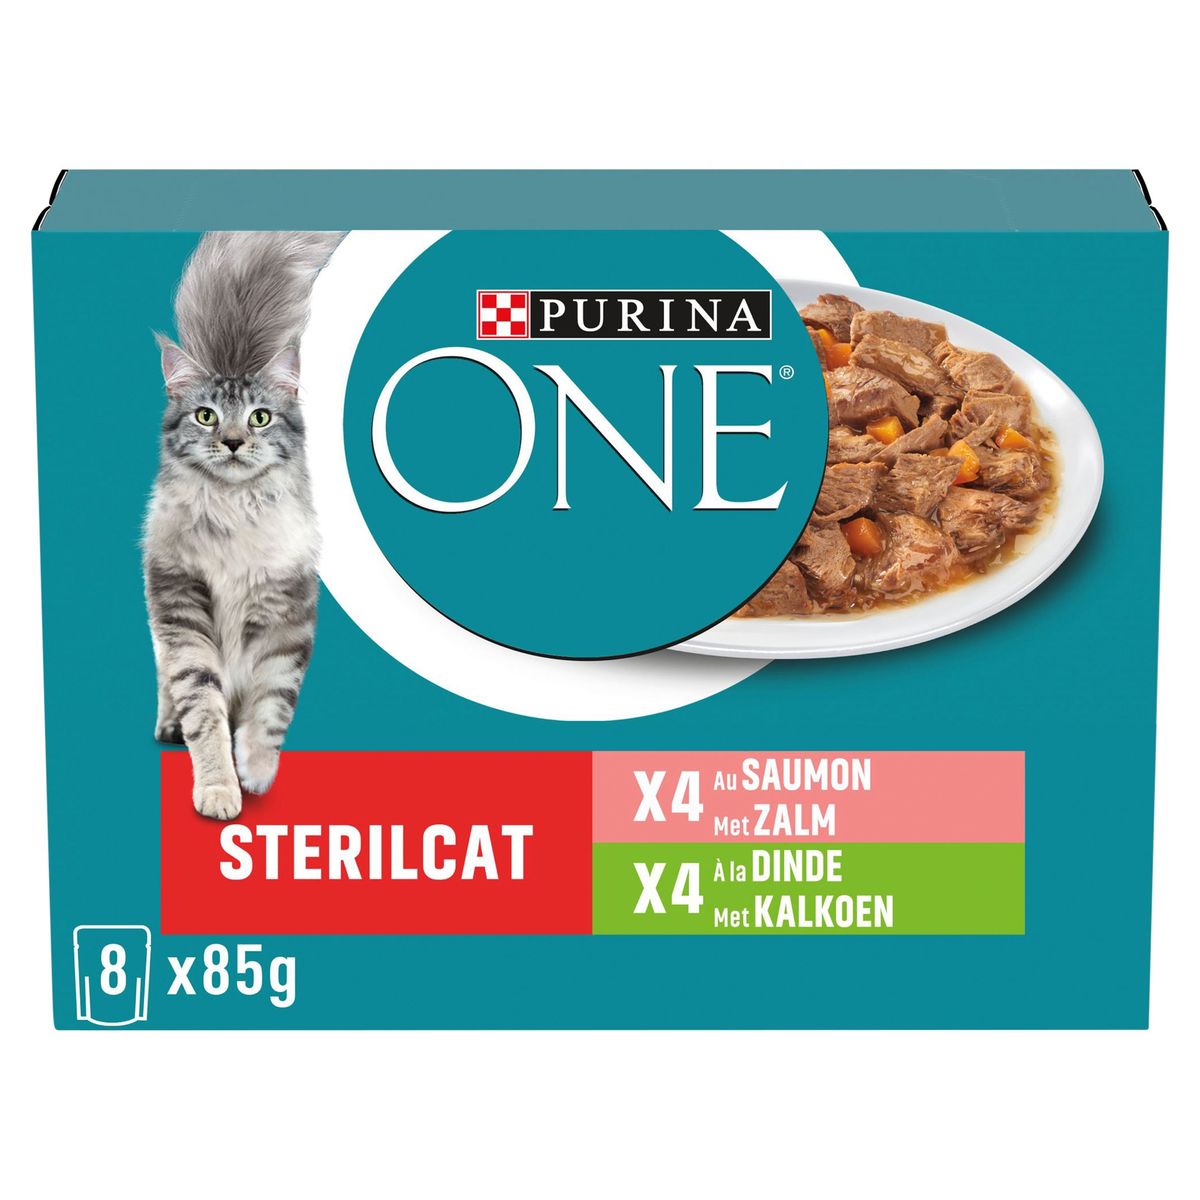 Purina ONE Kattenvoeding  Sterilcat Kalkoen 8x85g